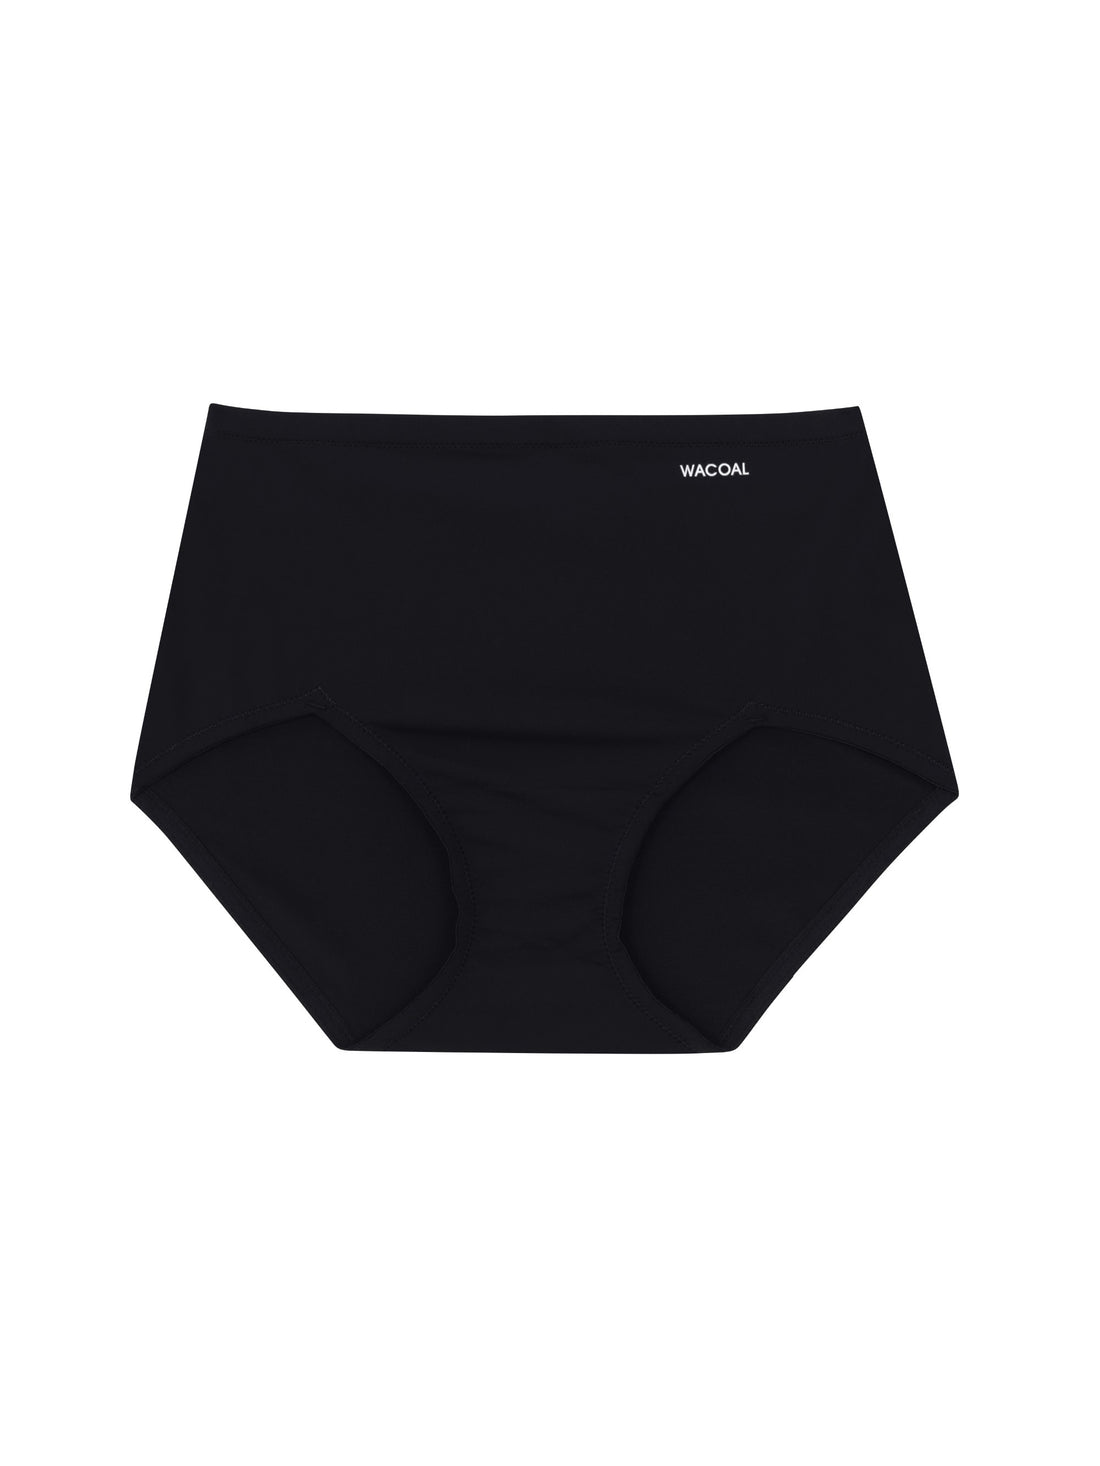 Wacoal H-fit secret support กางเกงในกระชับหน้าท้อง รูปแบบเต็มตัว (SHORT) รุ่น WU4959  สีดำ (BL)